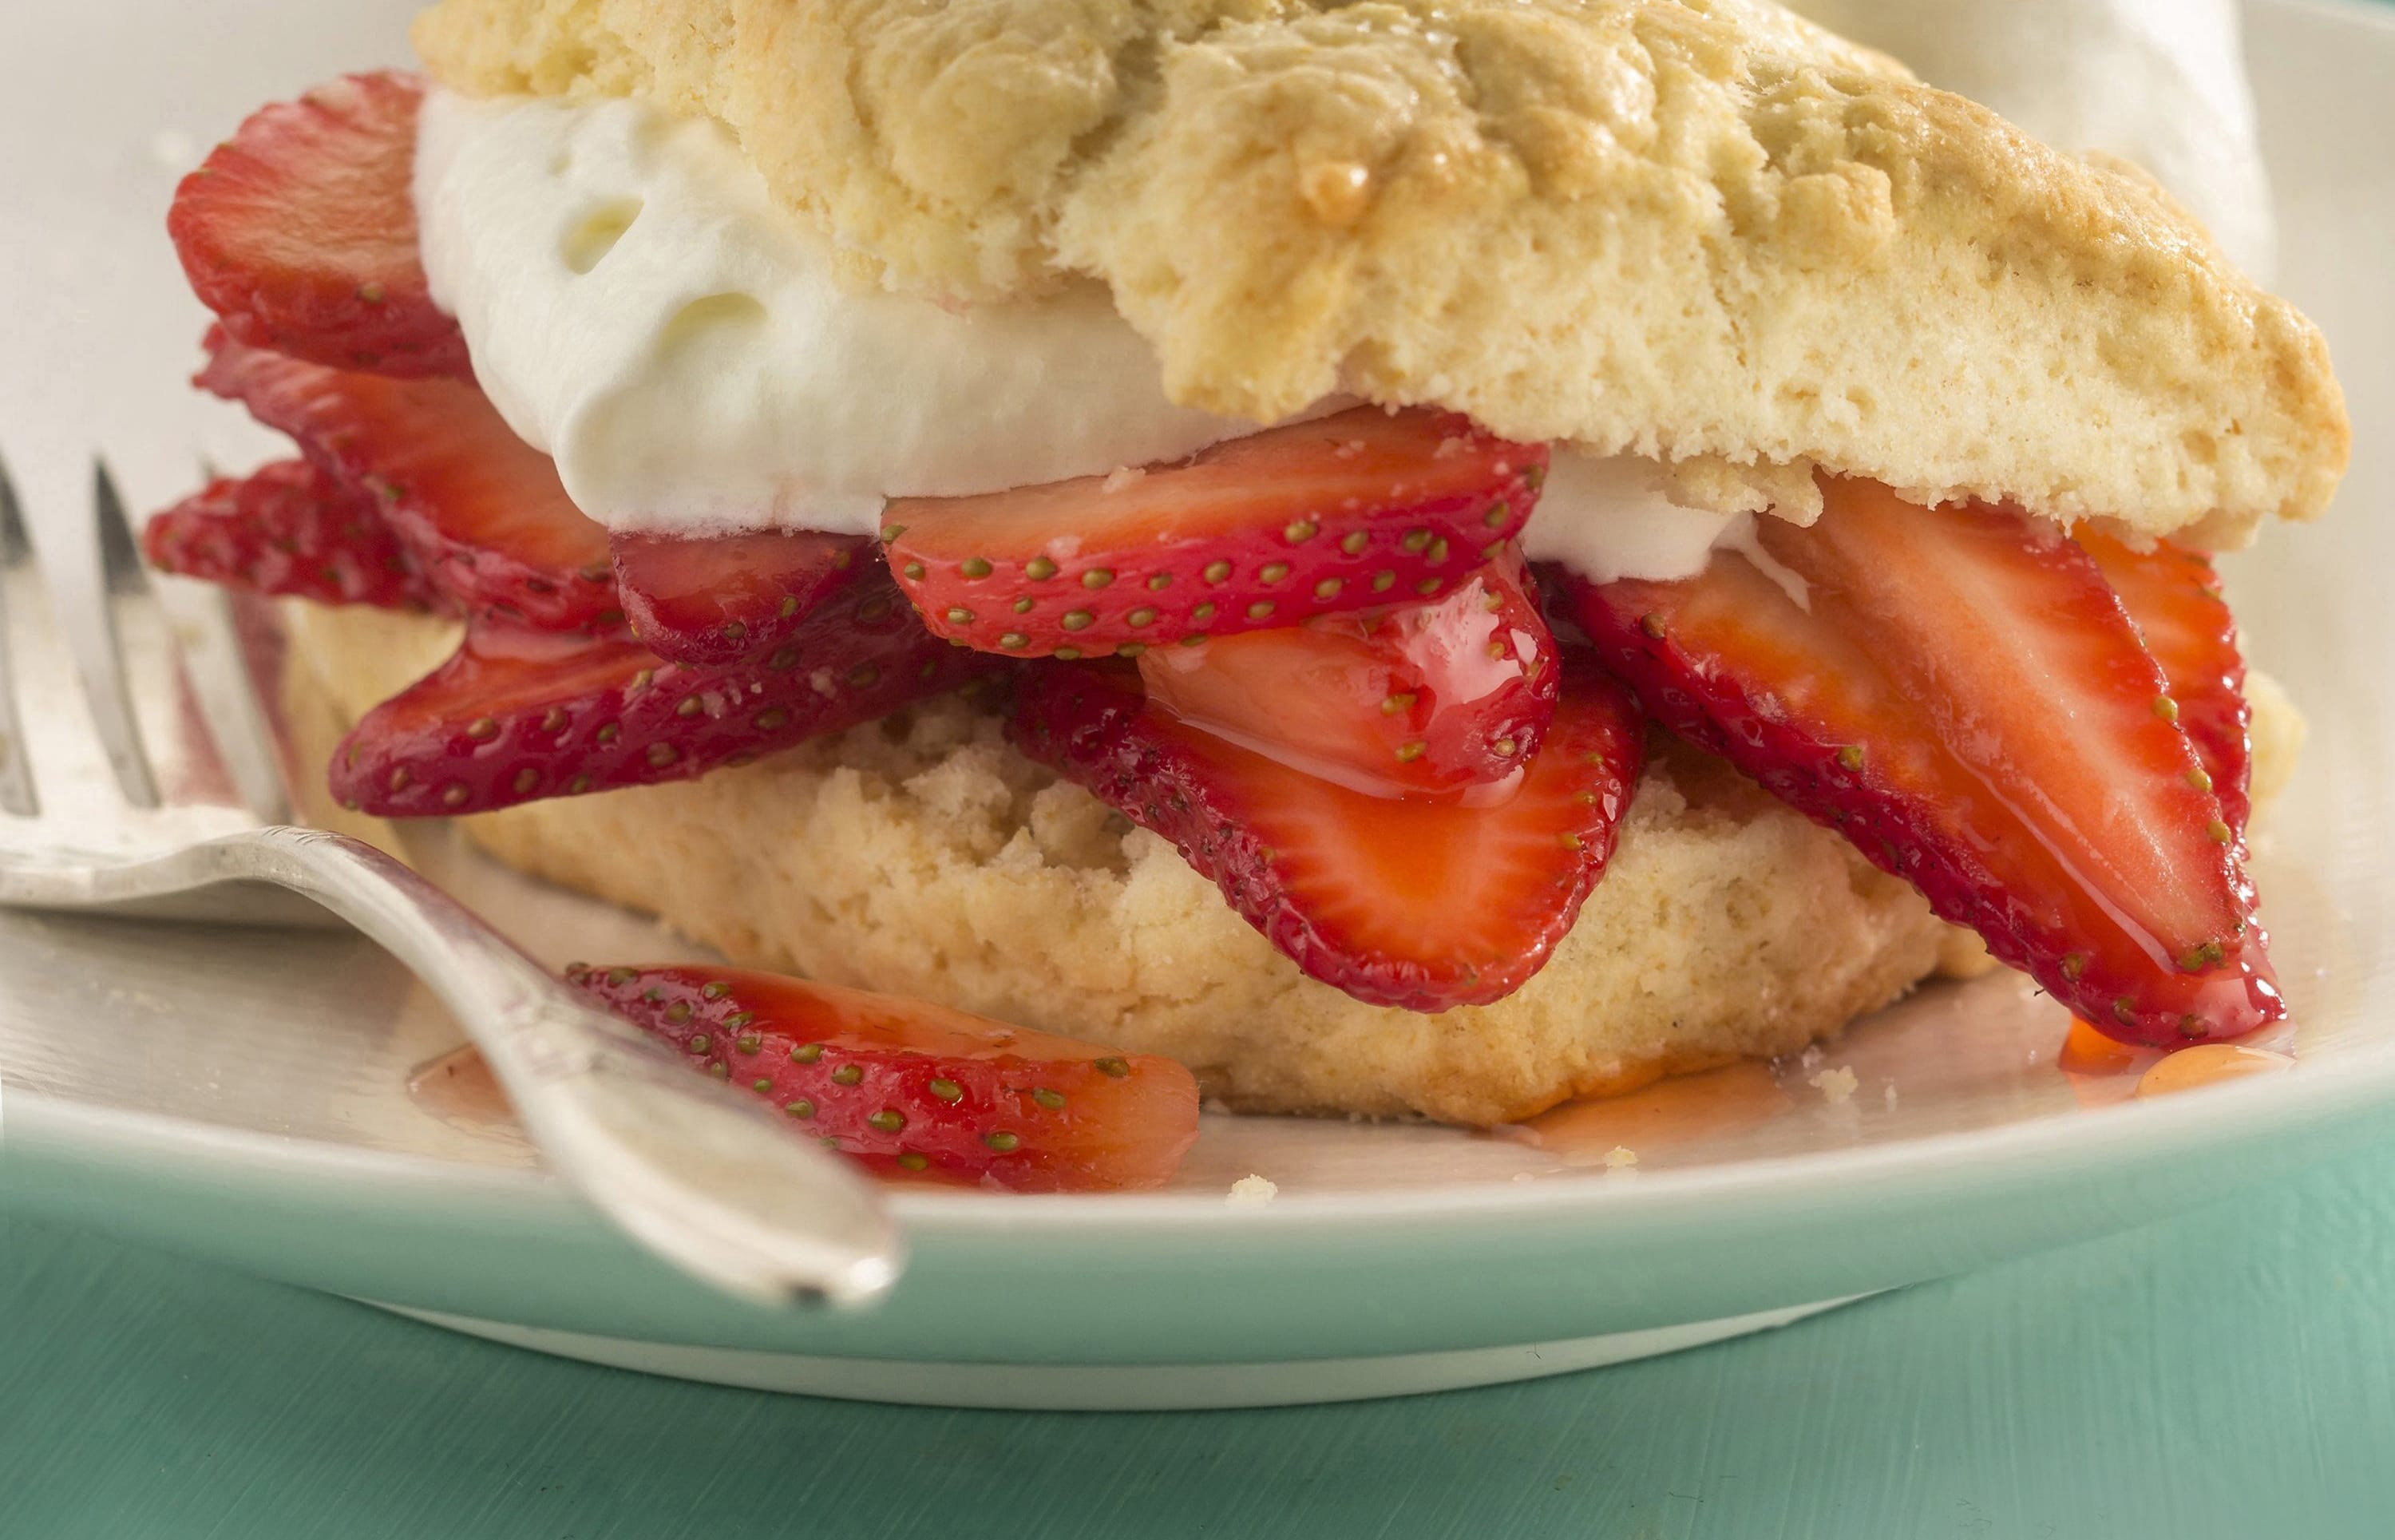 Celebrate the spring season with strawberry shortcake.